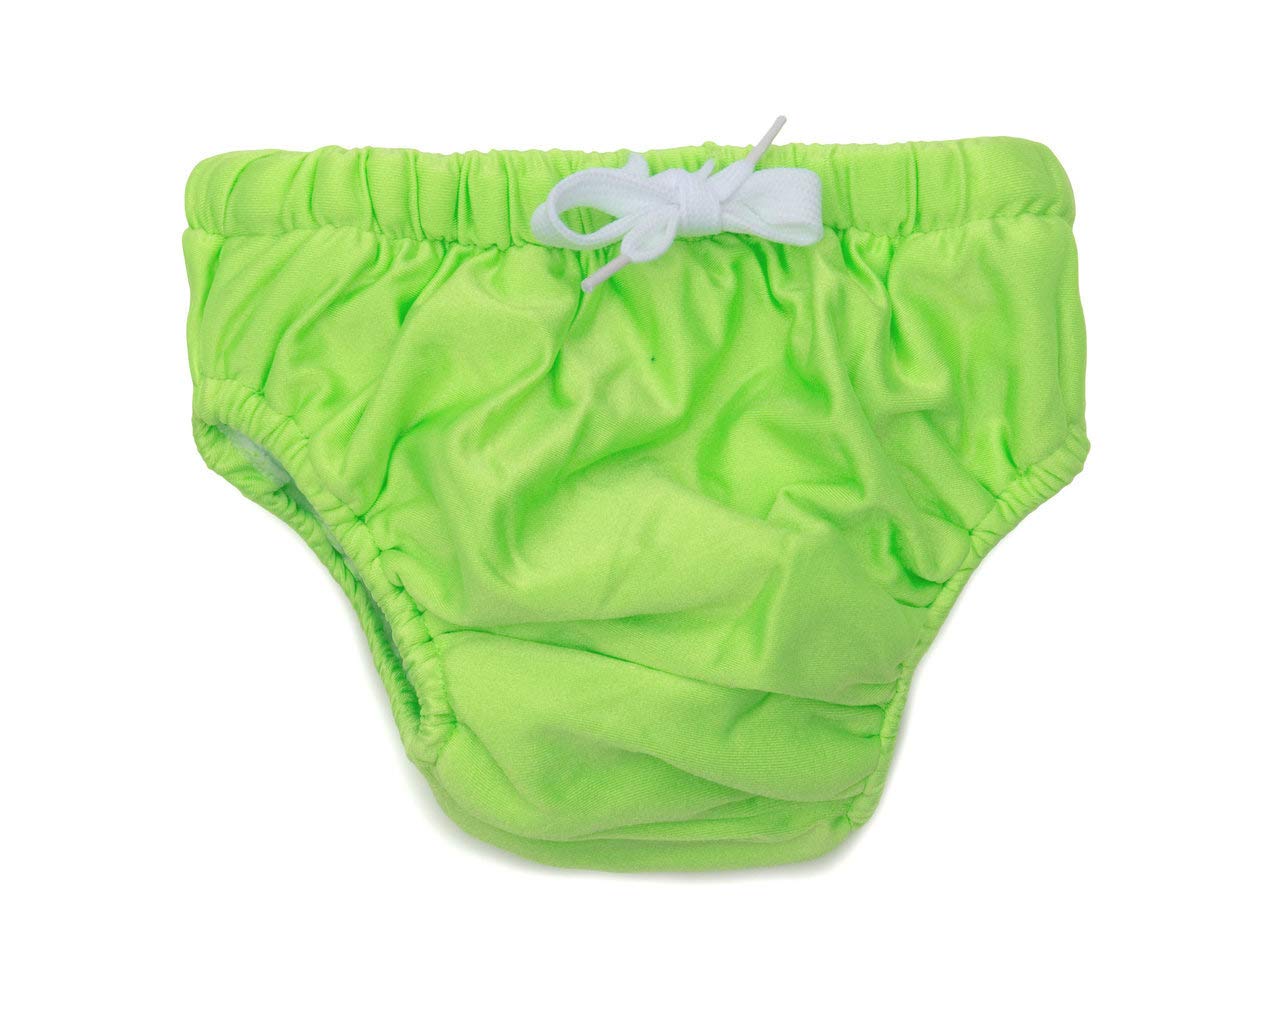 KaWaii Baby Reusable Swim Diaper Stretchy Mesh Layer Boys & Girls (L) 32-40 pounds 2-Pack